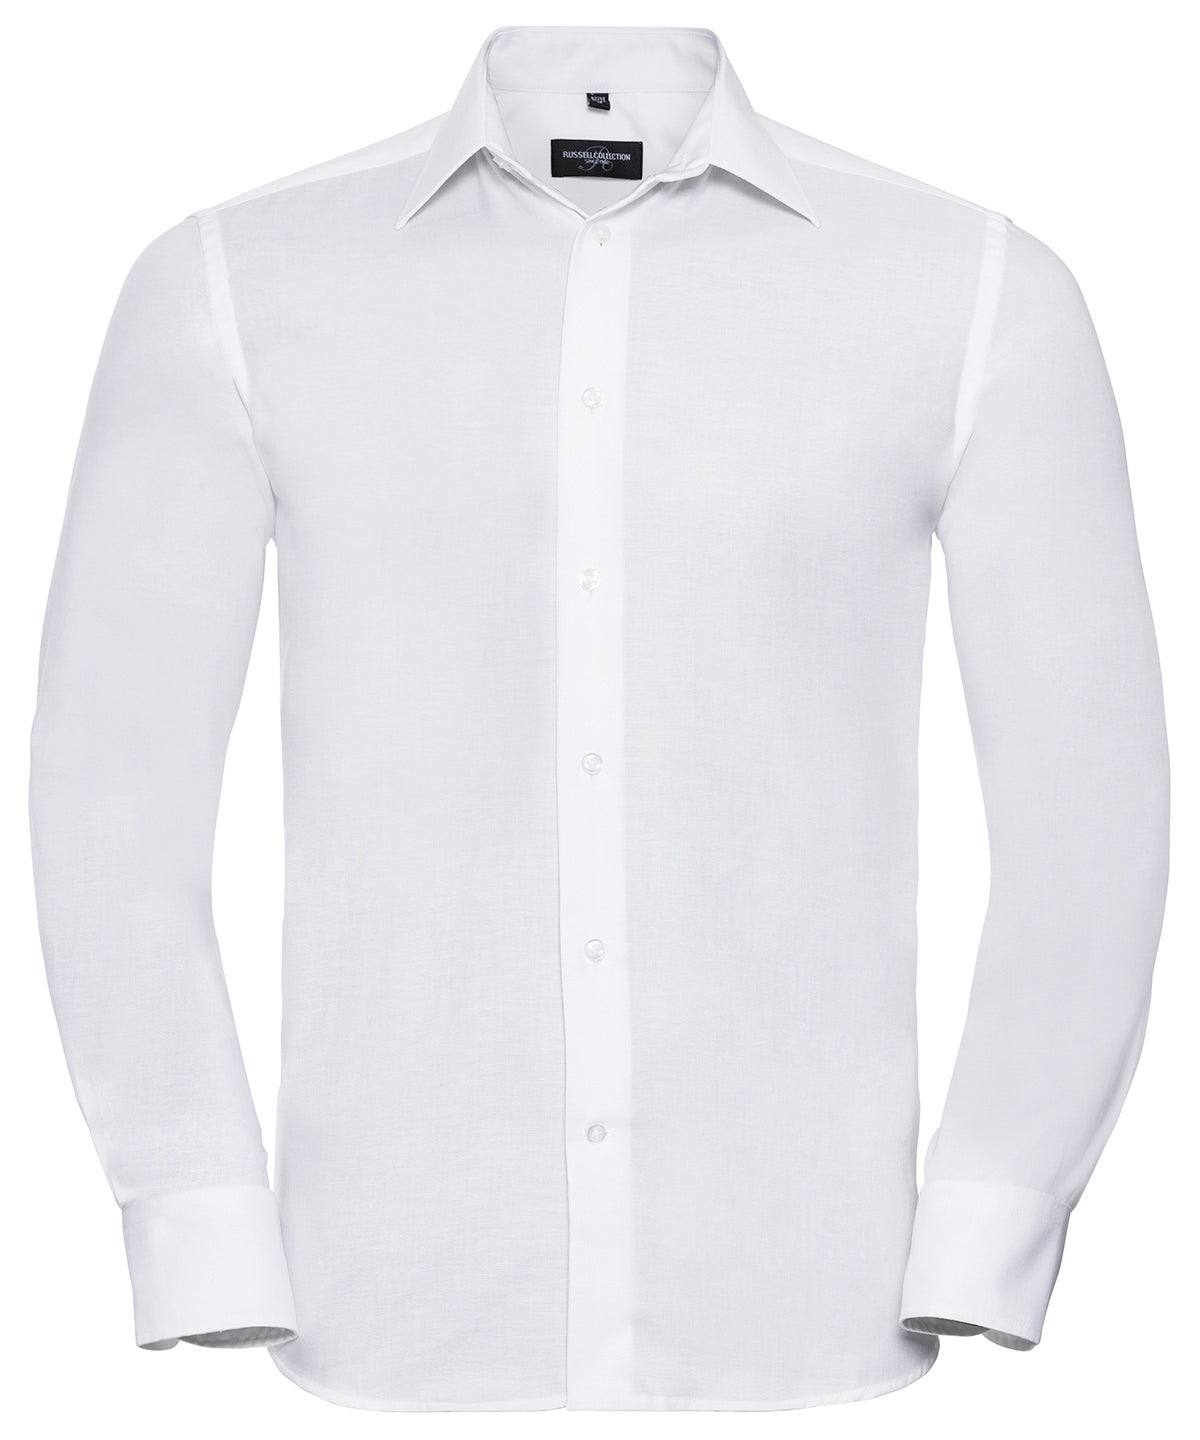 Bolir - Long Sleeve Easycare Tailored Oxford Shirt